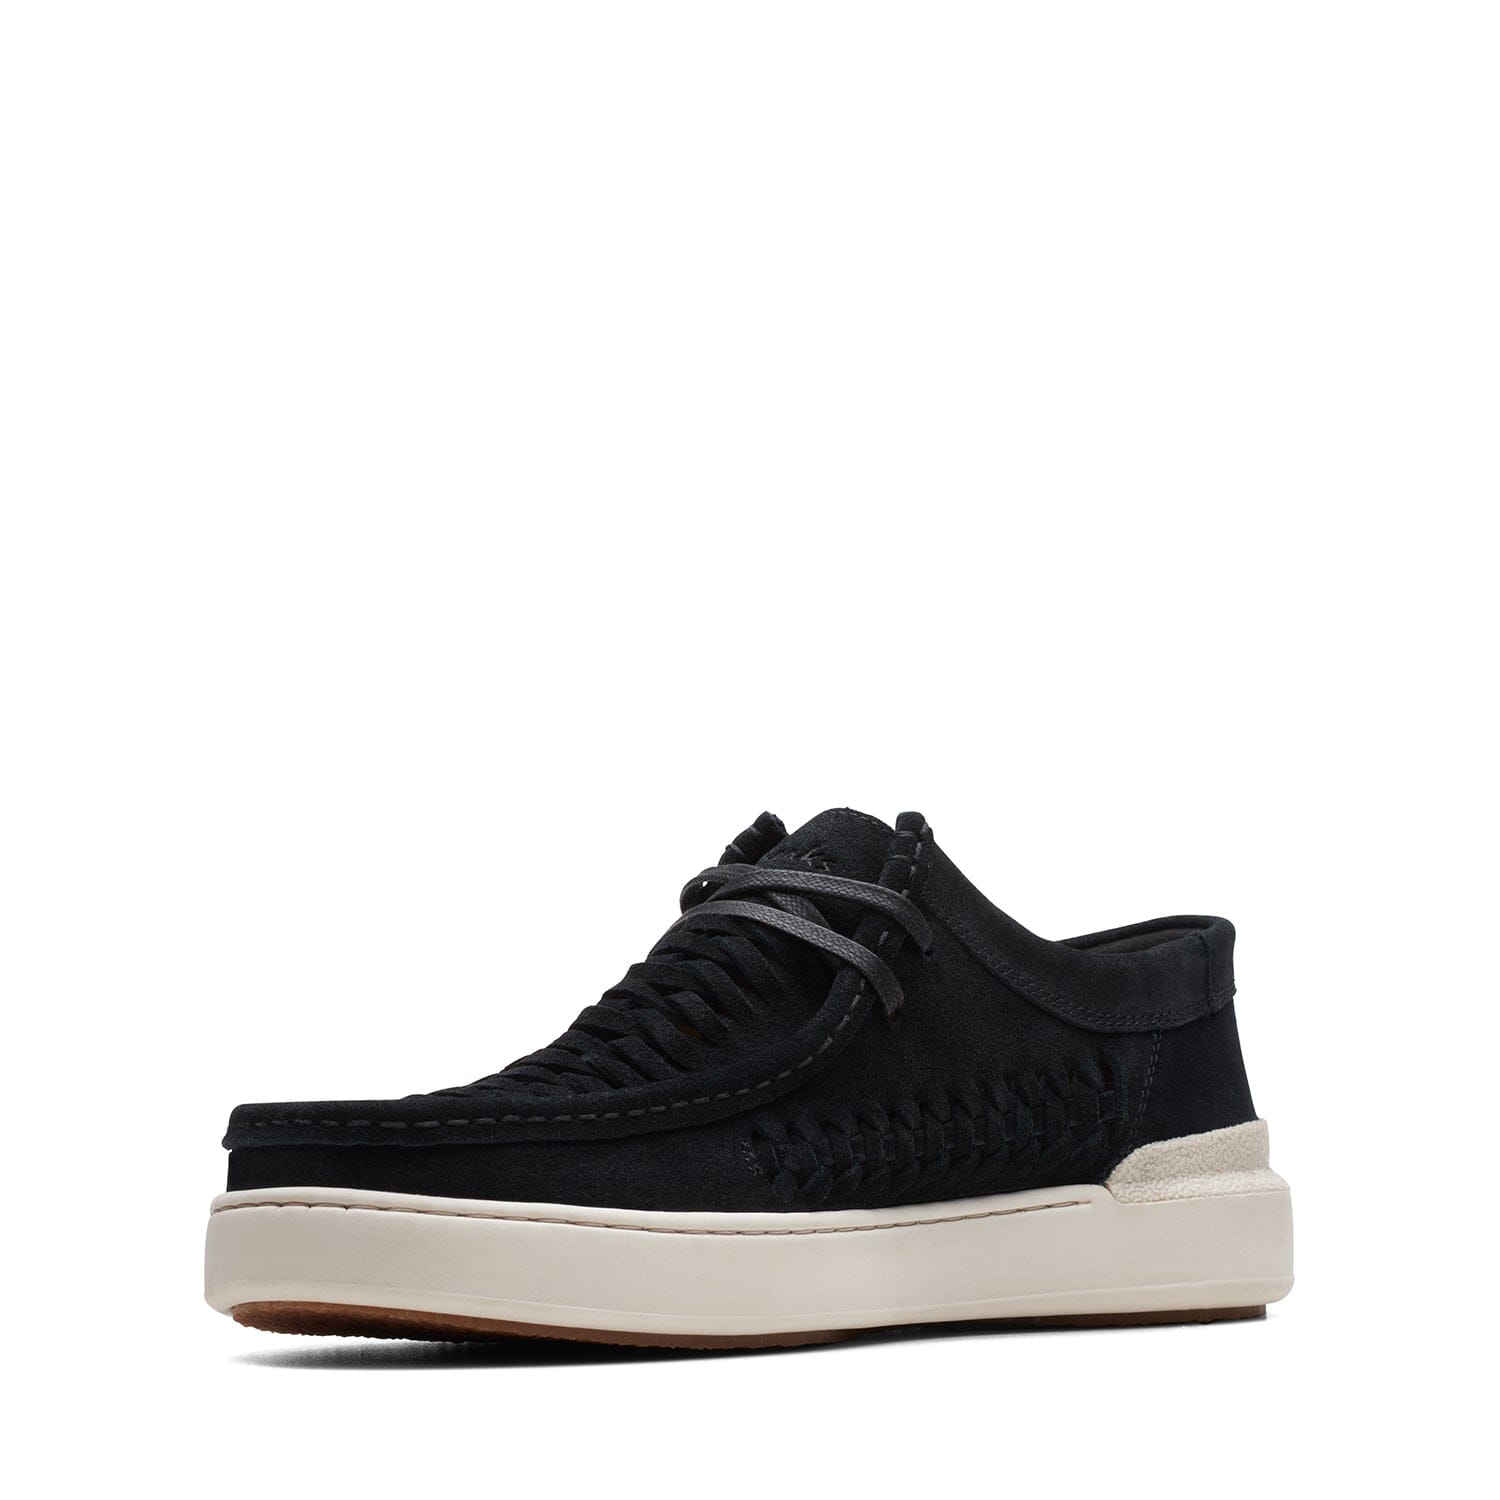 Clarks Courtliteweave - Shoes - Black Weave - 261724497 - G Width (Standard Fit)